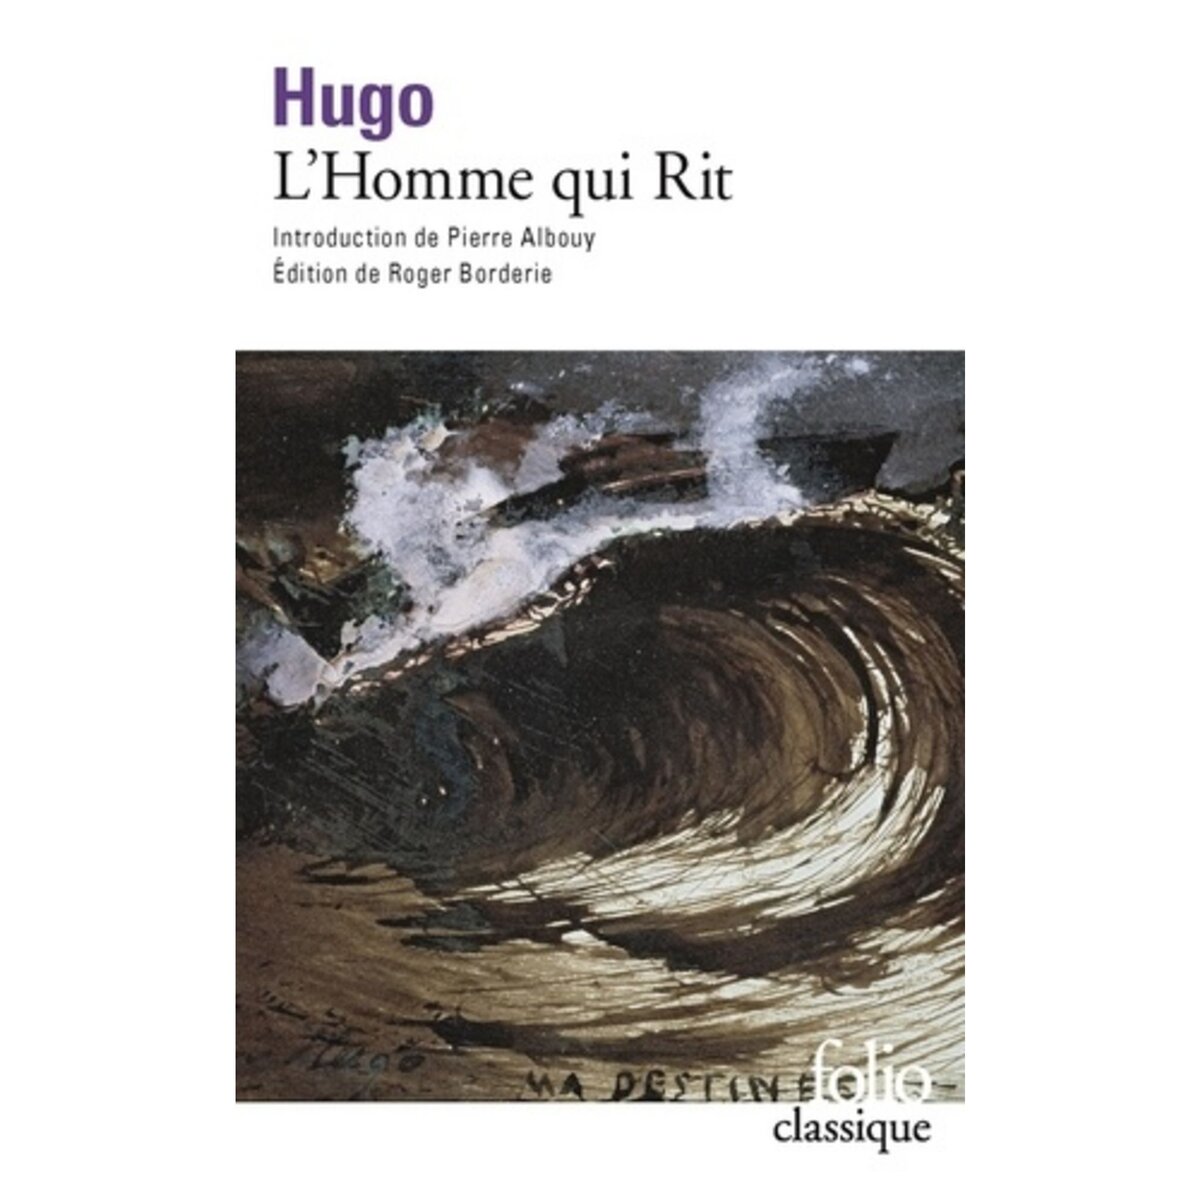  L'HOMME QUI RIT, Hugo Victor